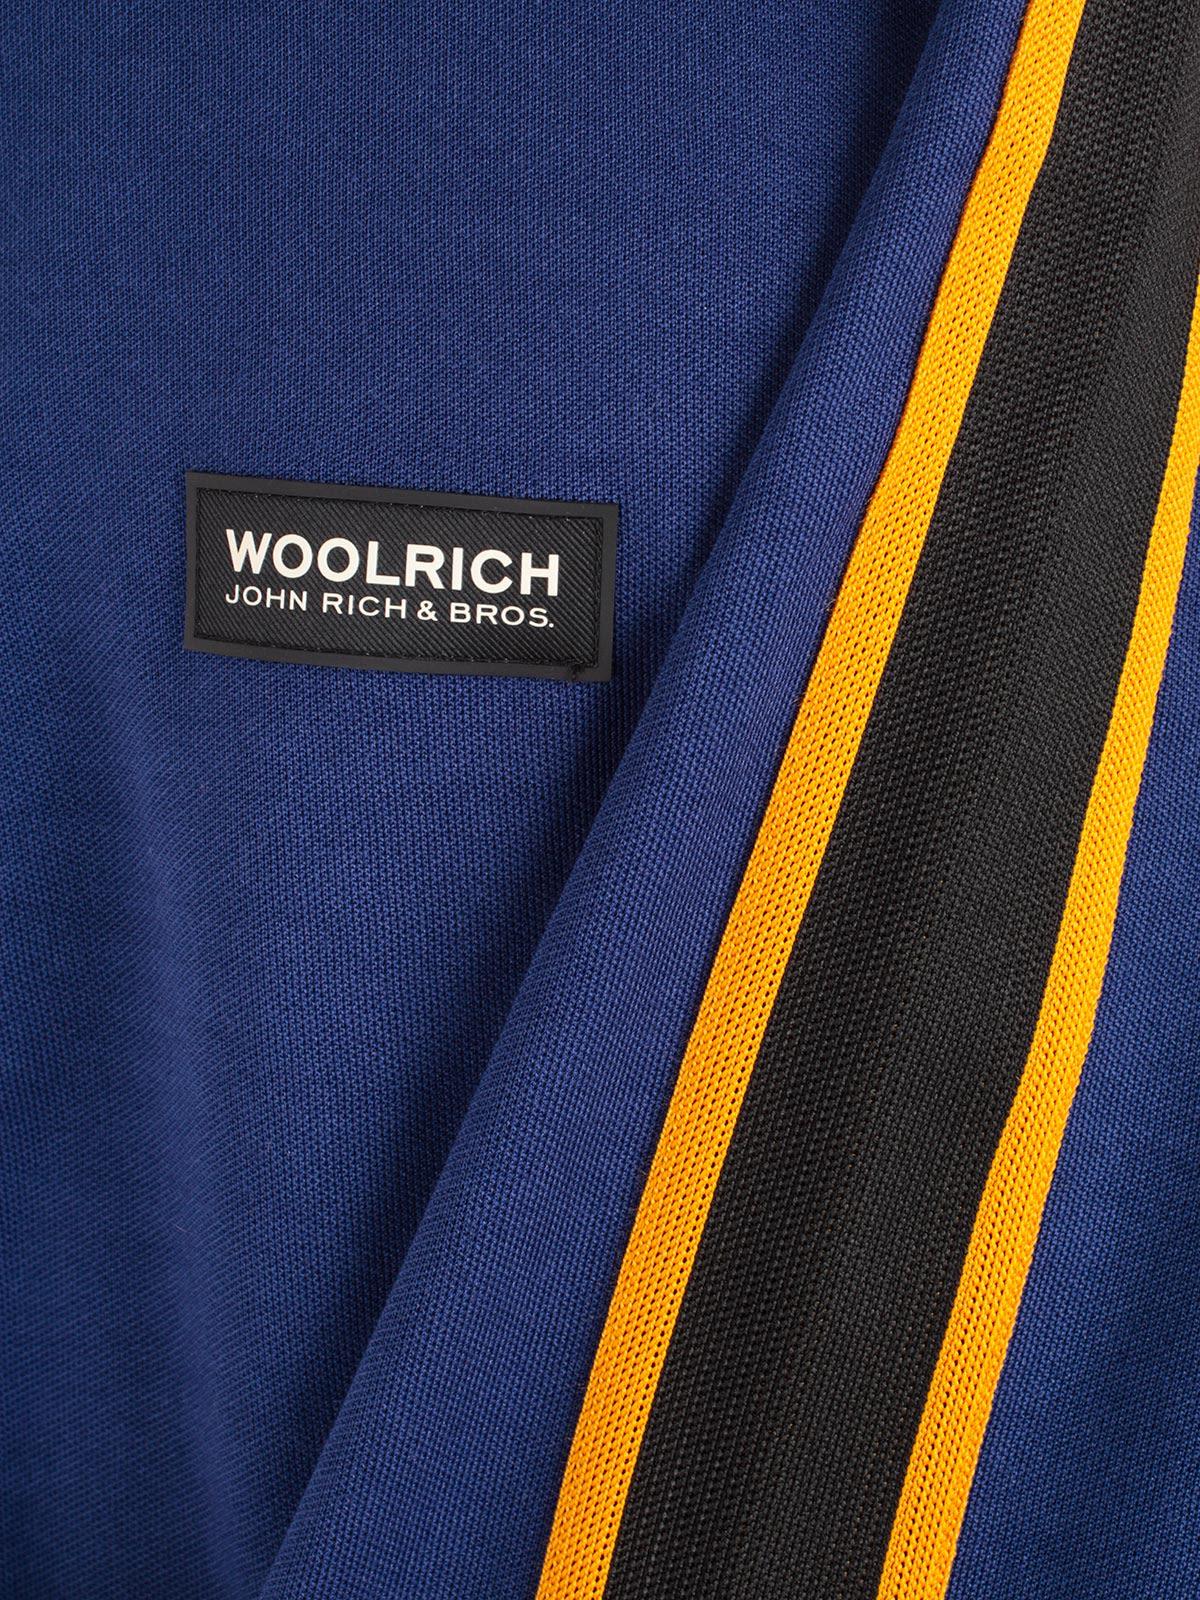 Woolrich Logo - Woolrich Woolrich Logo Jacket Print